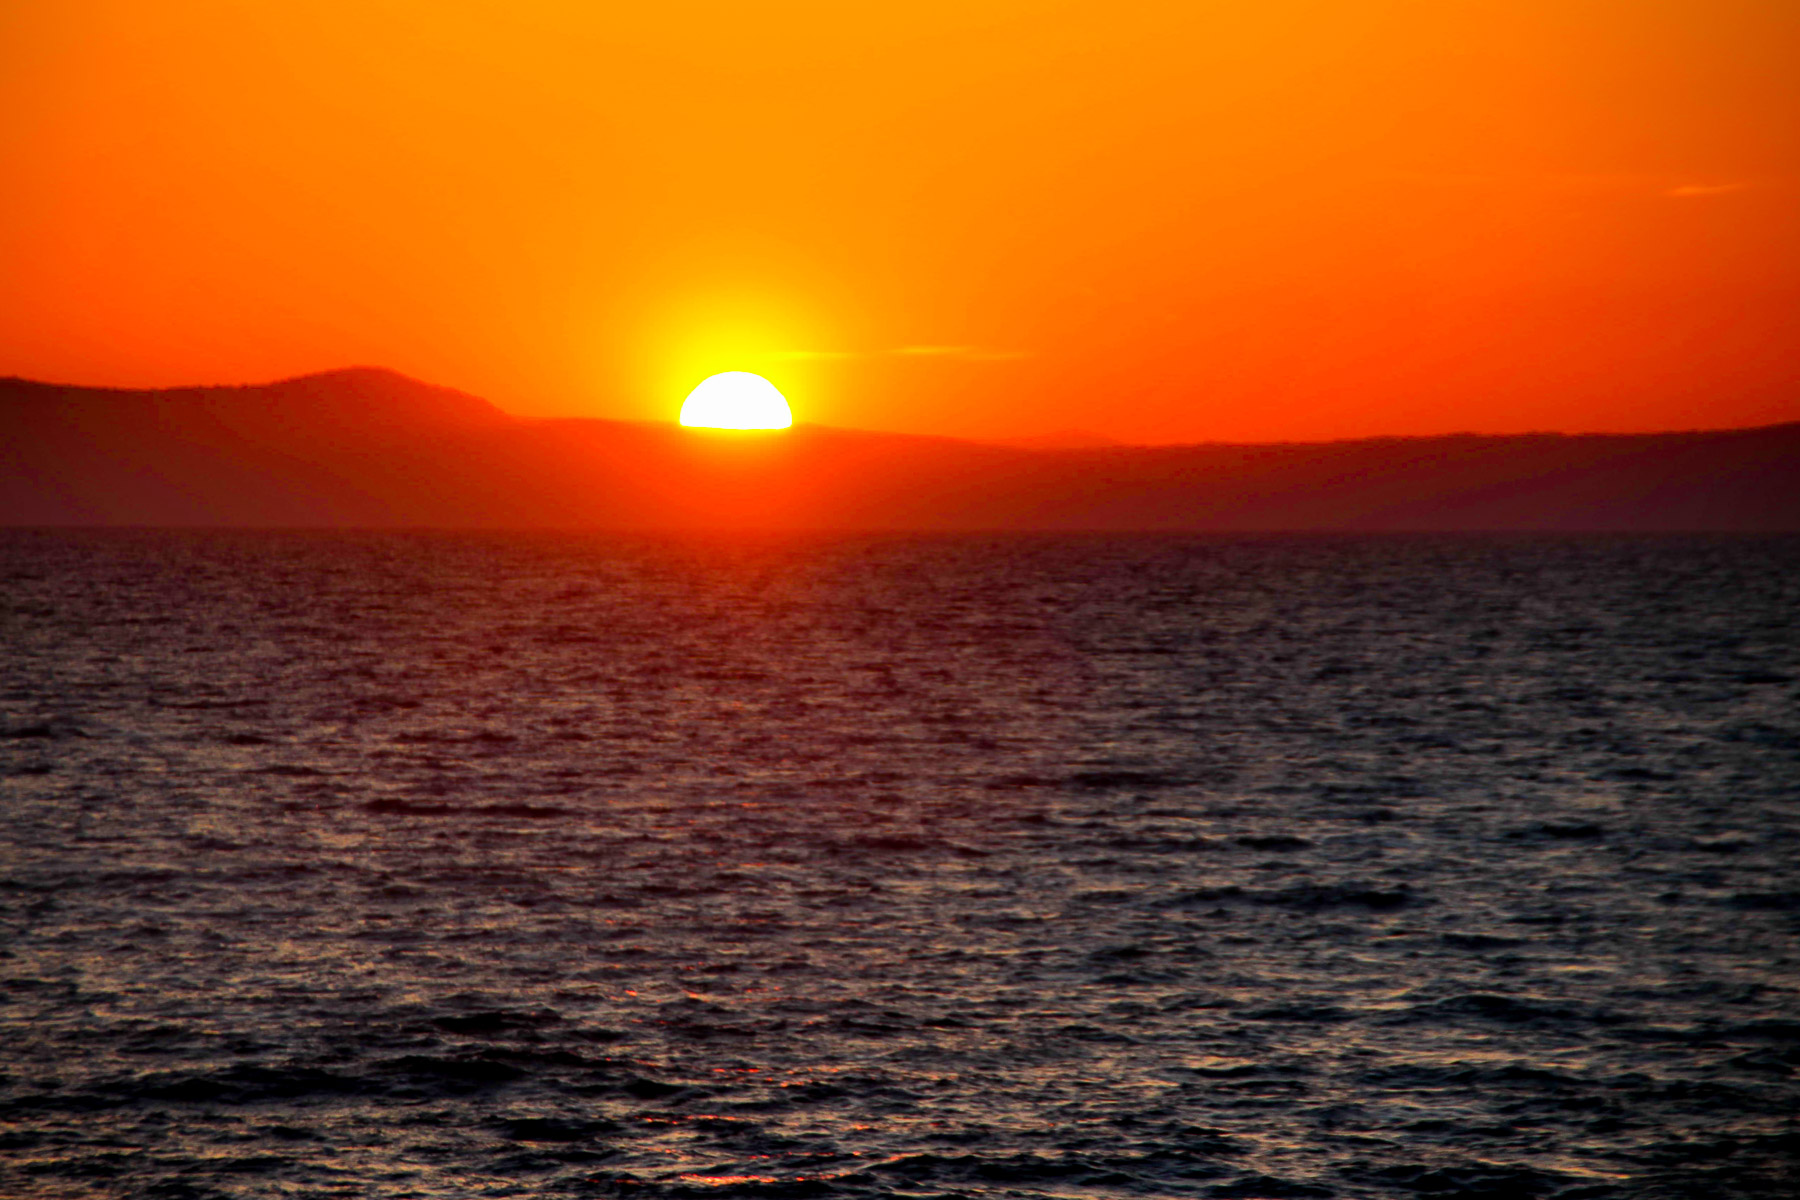 korcula island sunset